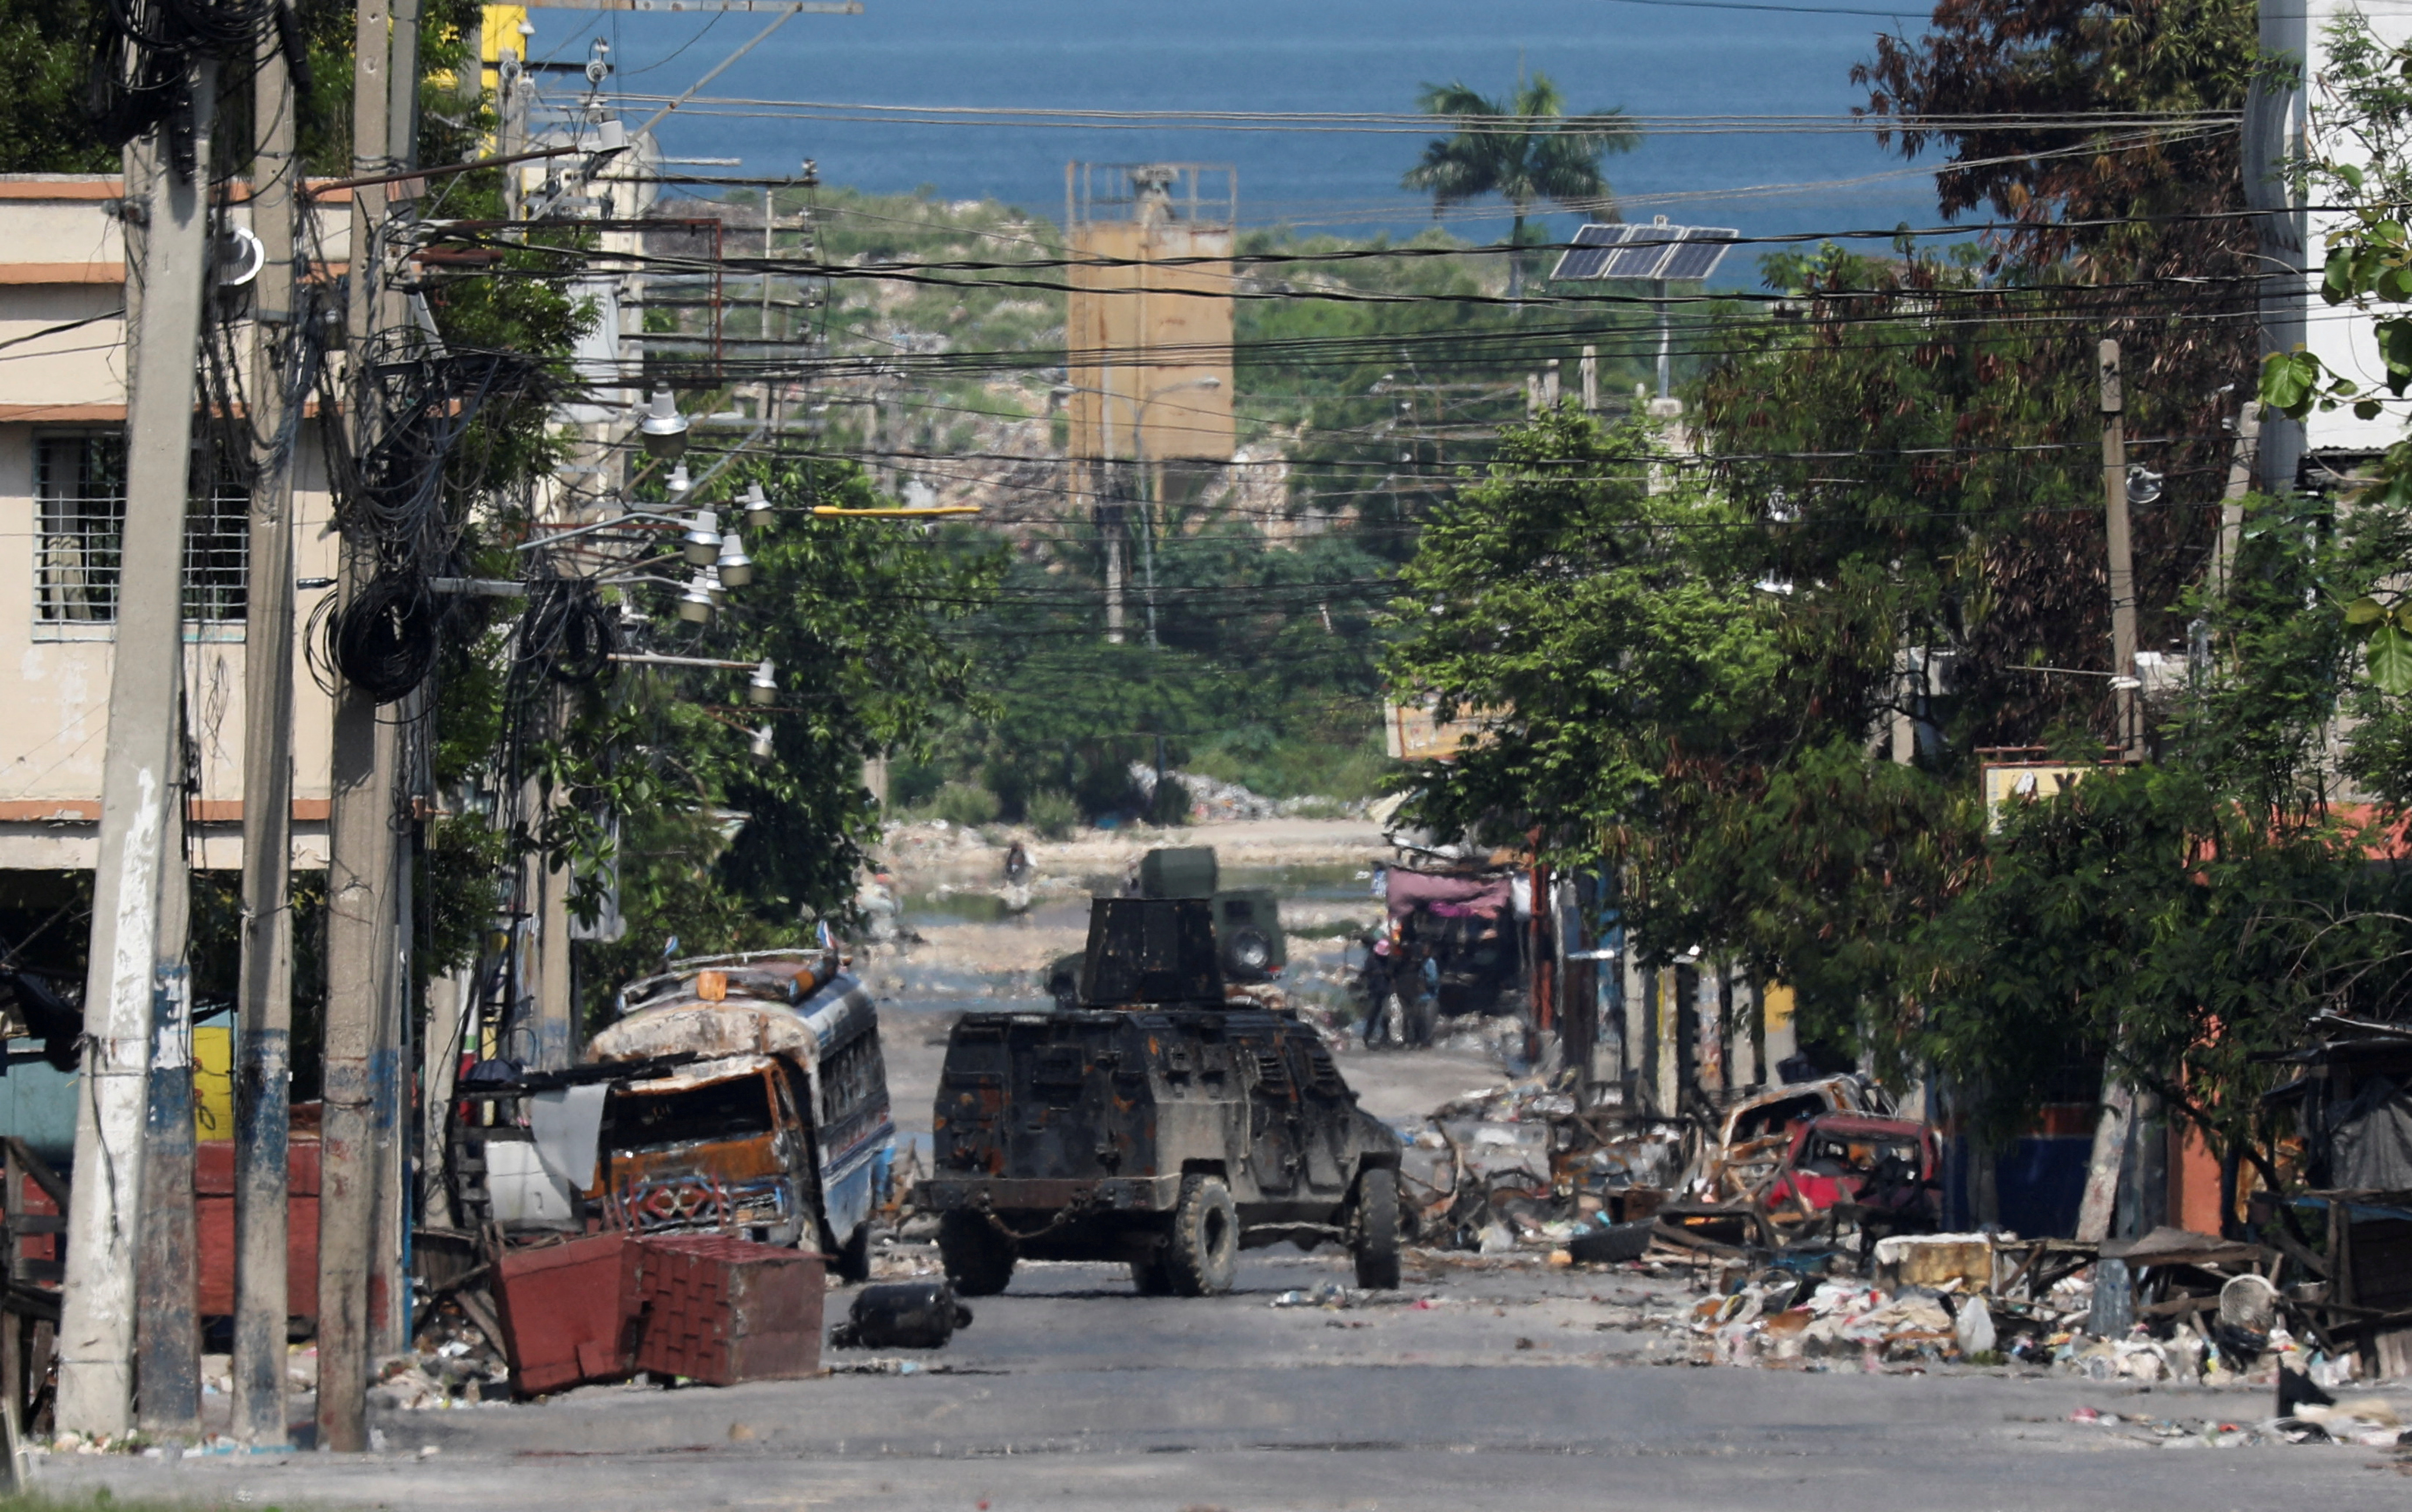 Police patrol the streets of Port-au-Prince amid rampant gang violence